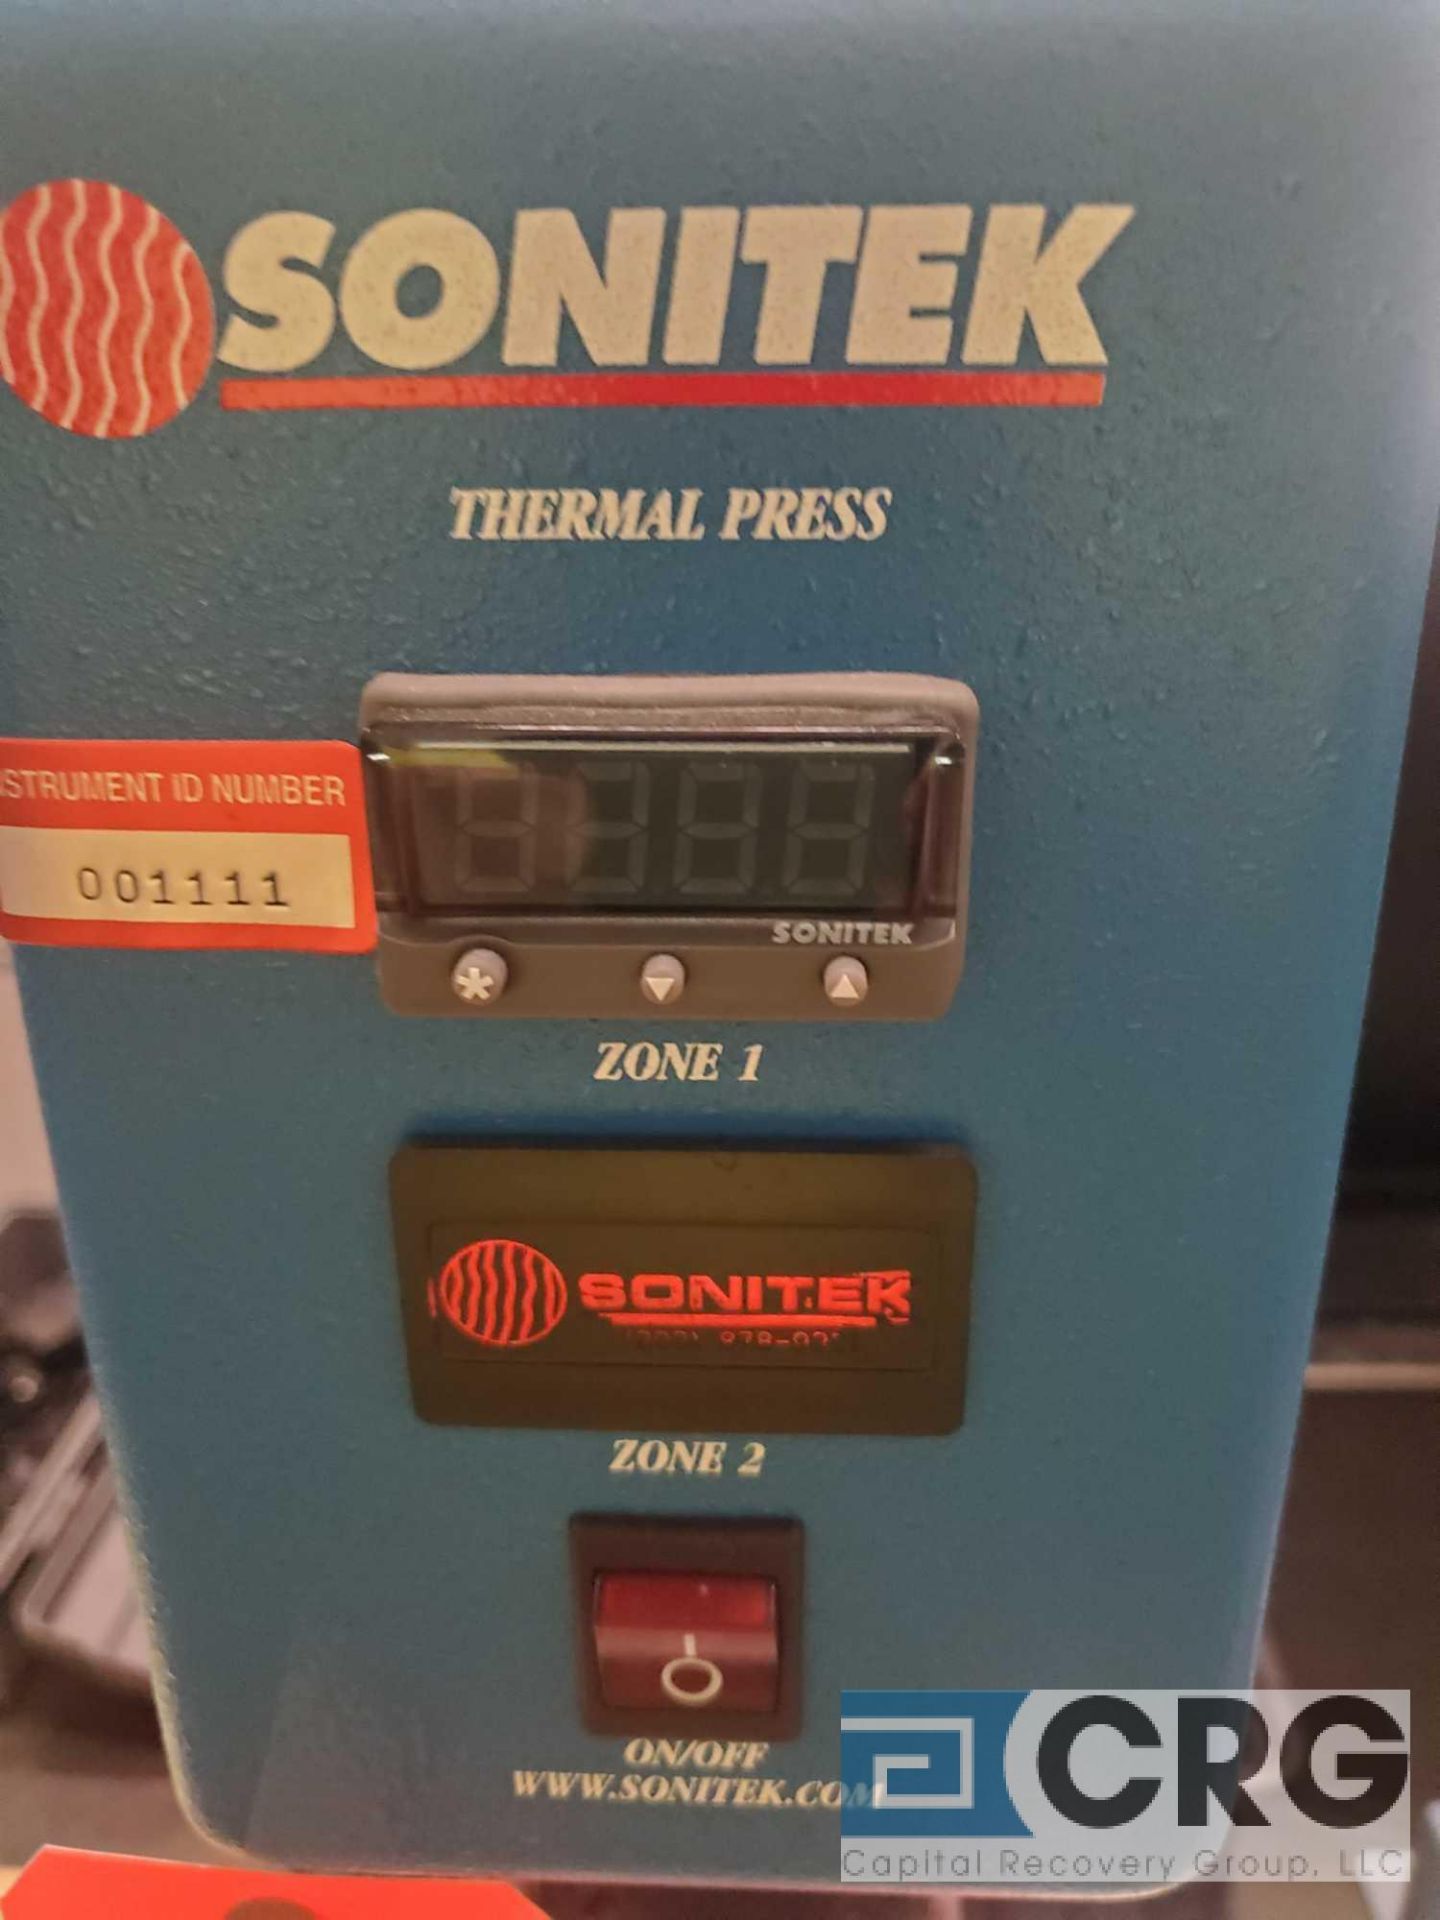 Sonitek Thermal Press TS 101/1 120 volt 1 phase - Image 3 of 4